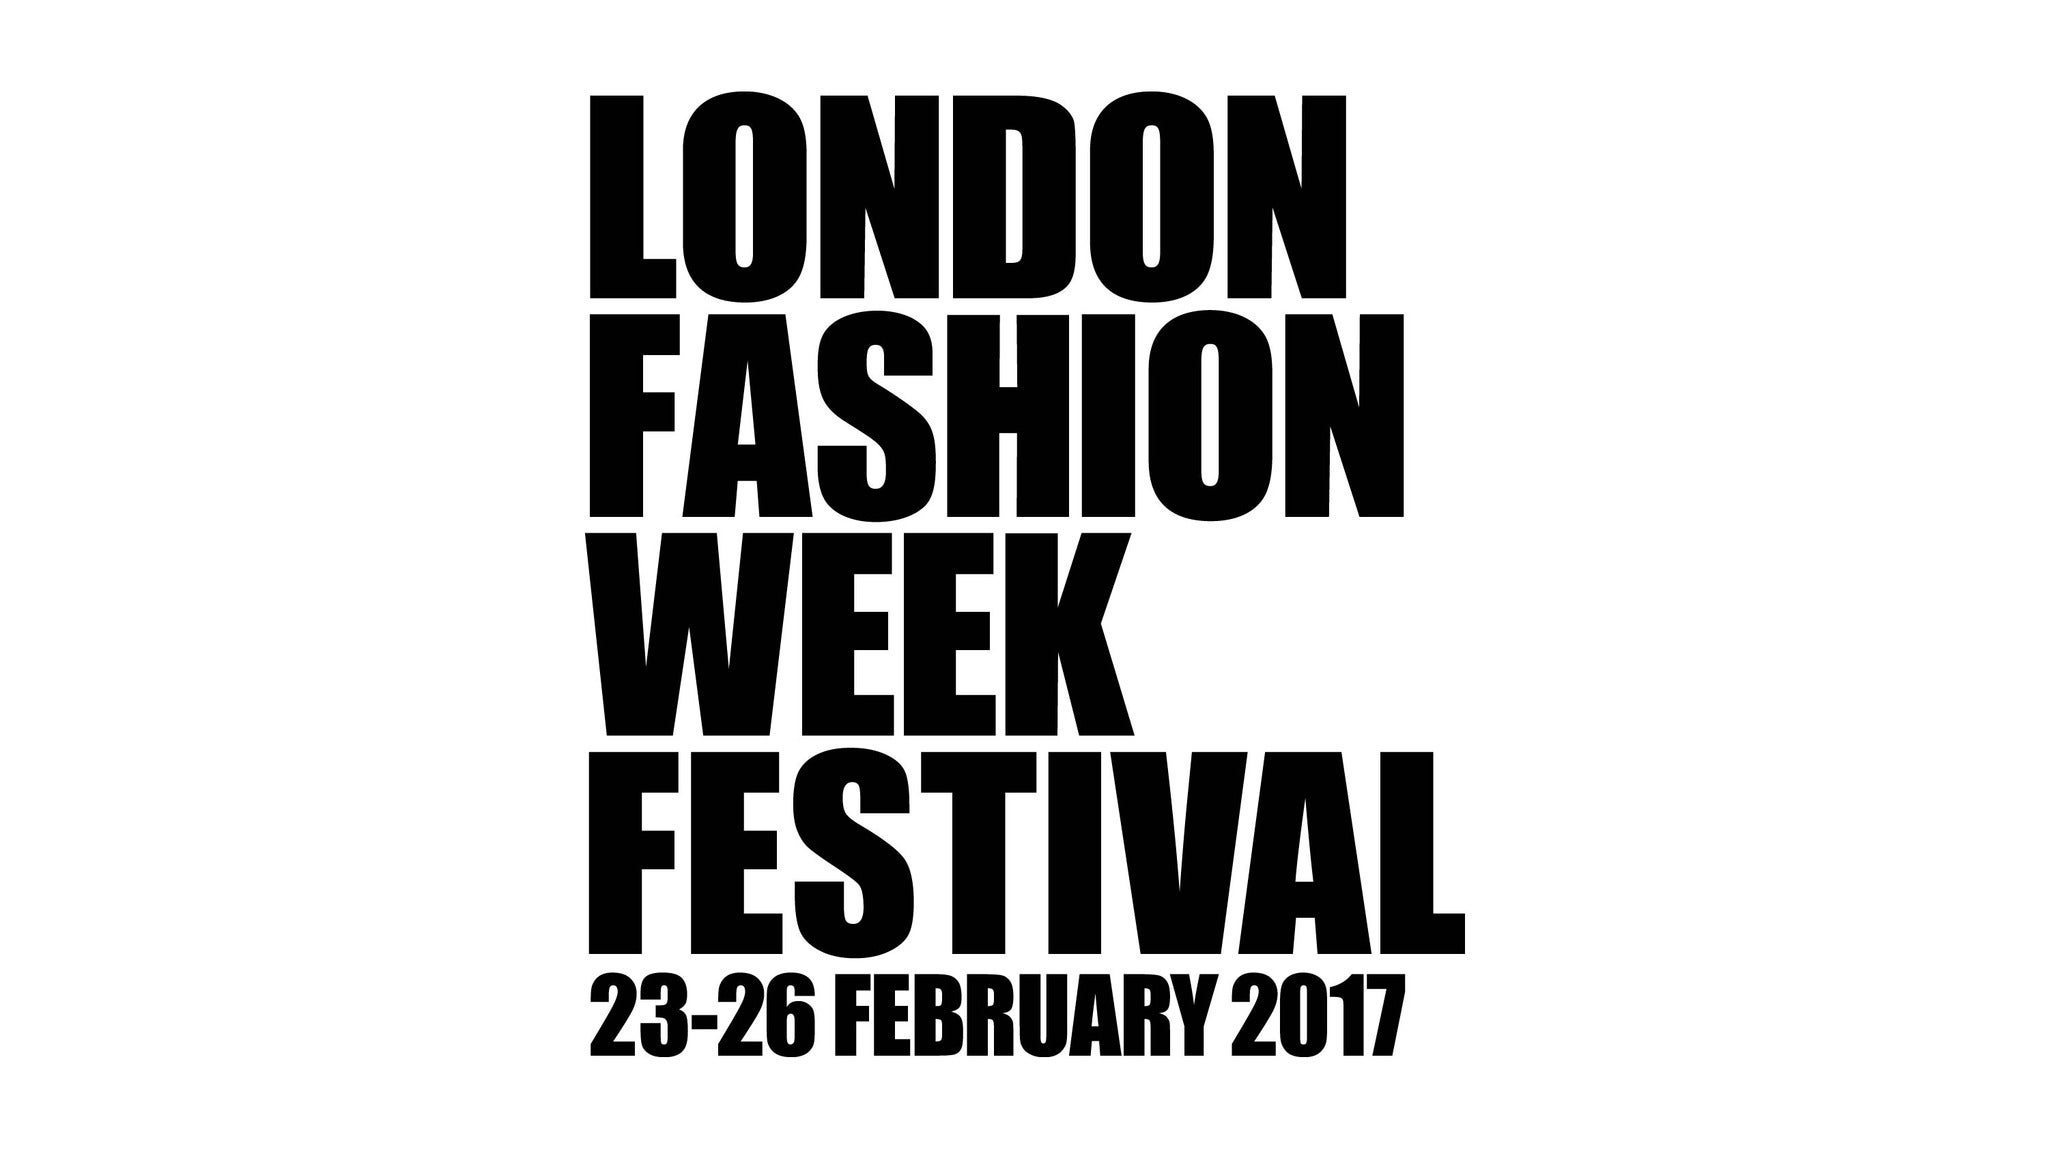 London Fashion Week Festival Tickets Event Dates & Schedule